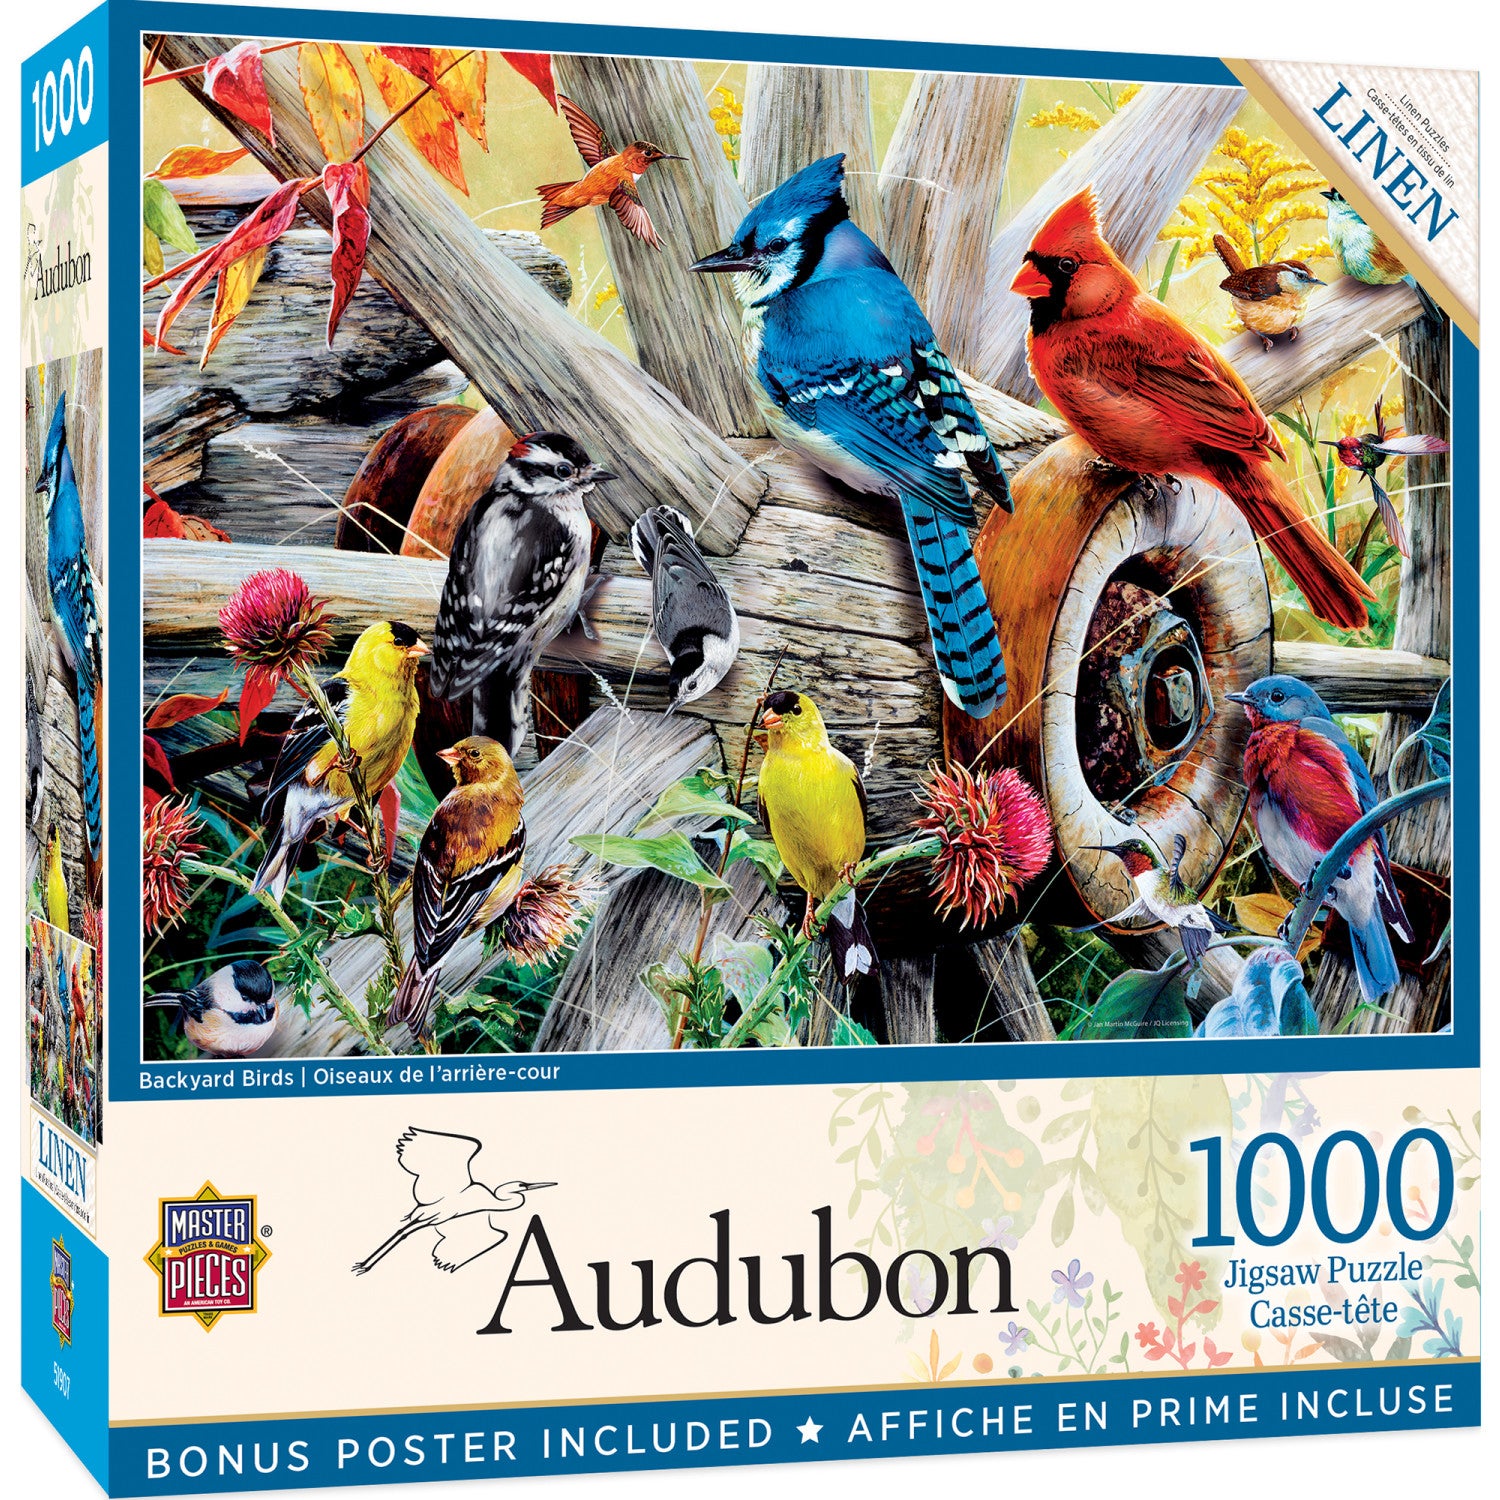 Audubon - Backyard Birds 1000 Piece Jigsaw Puzzle